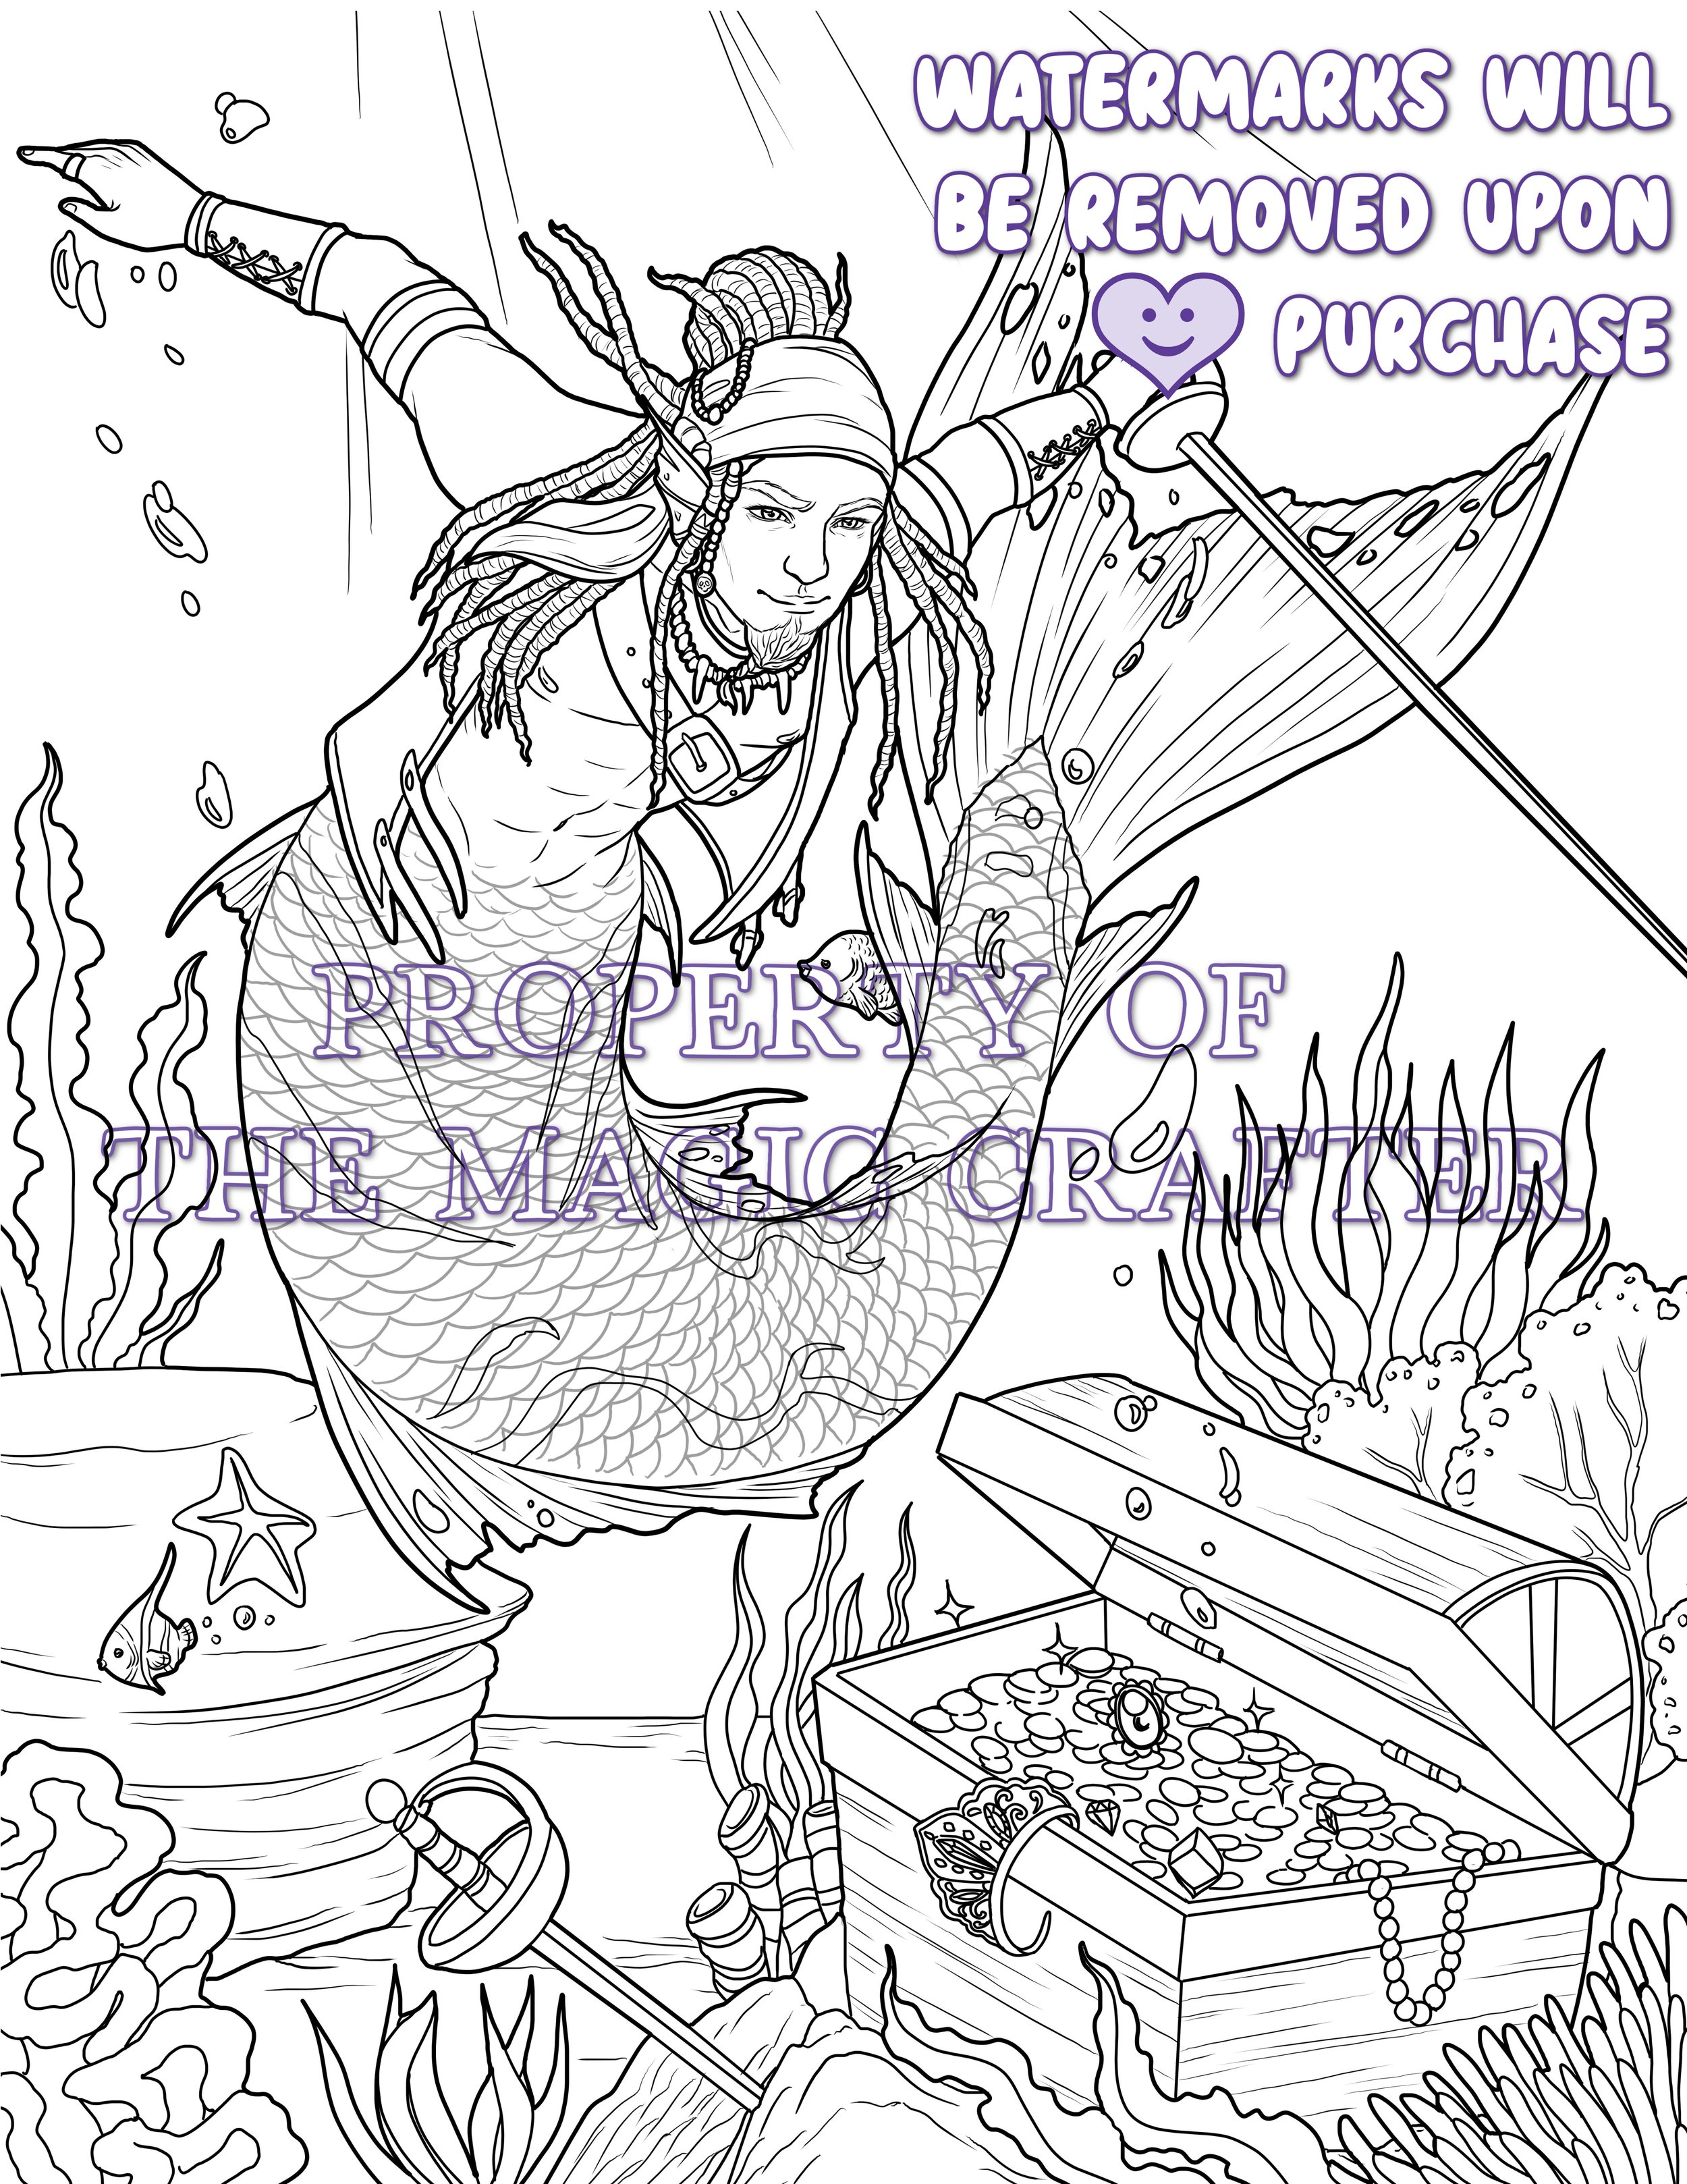 merman pirate coloring page - black mermaid man - the magic crafter.jpg